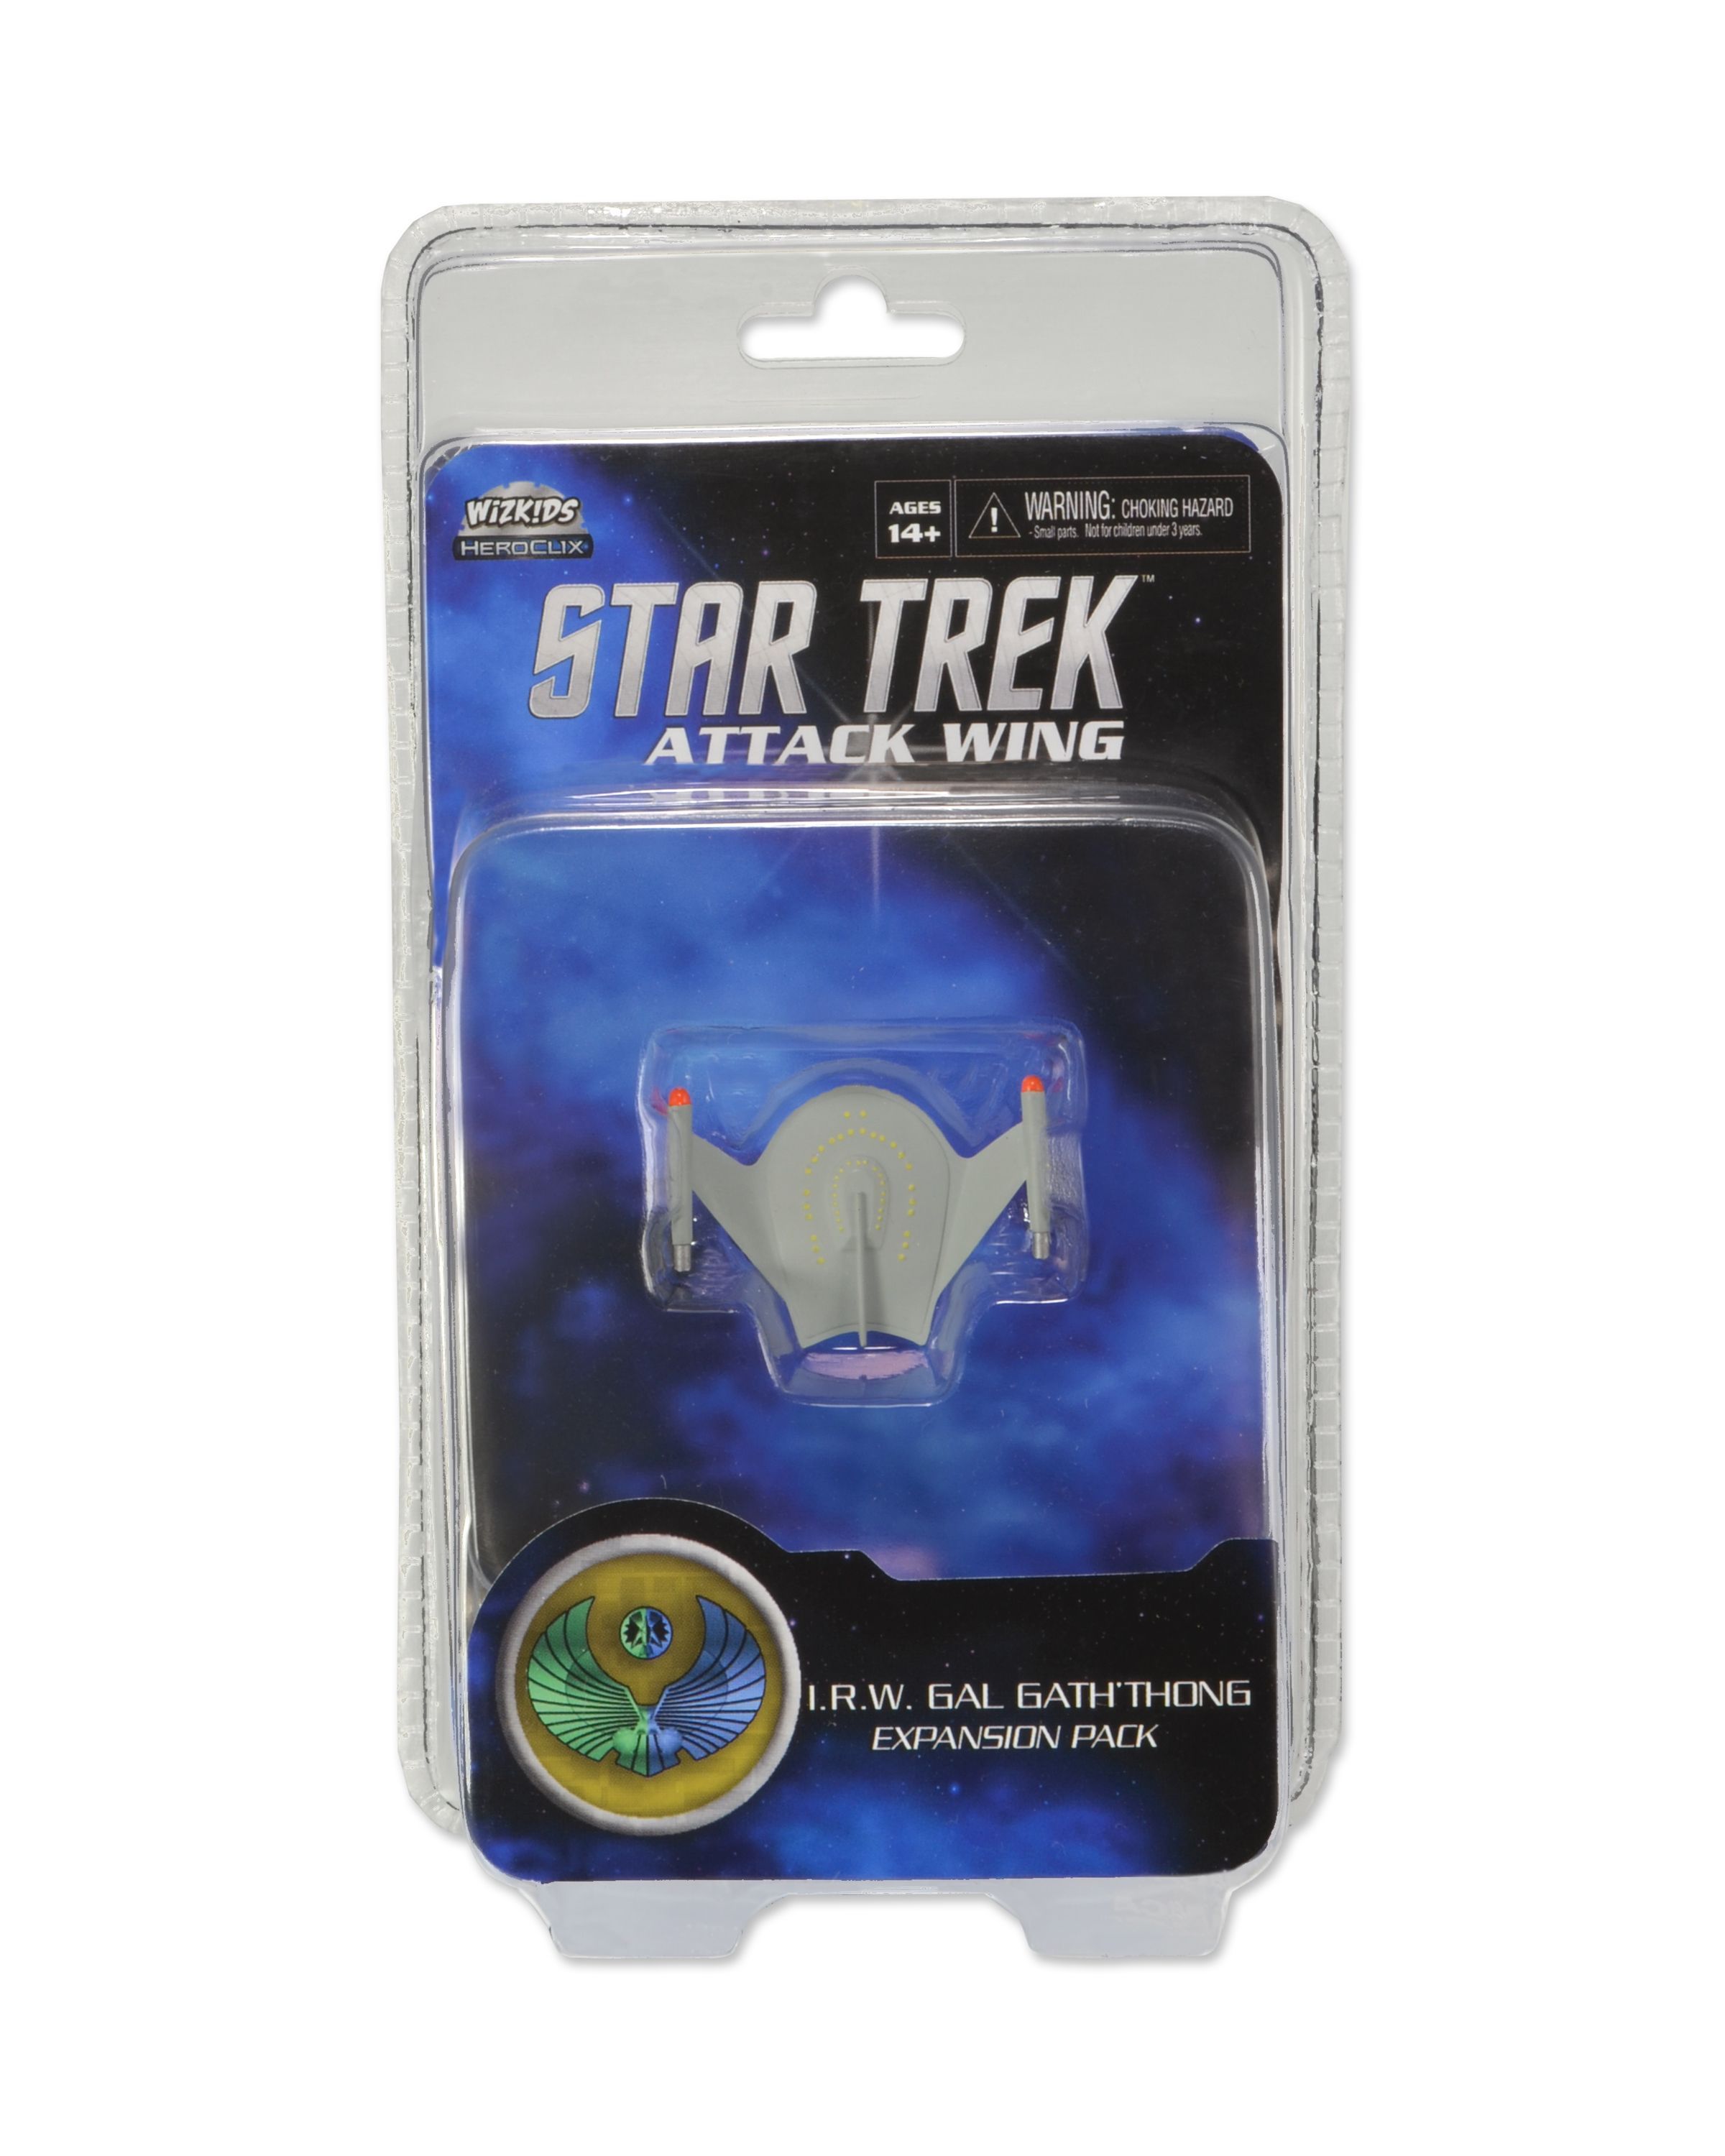 Star Trek: Attack Wing – I.R.W. Gal Gath'thong Expansion Pack